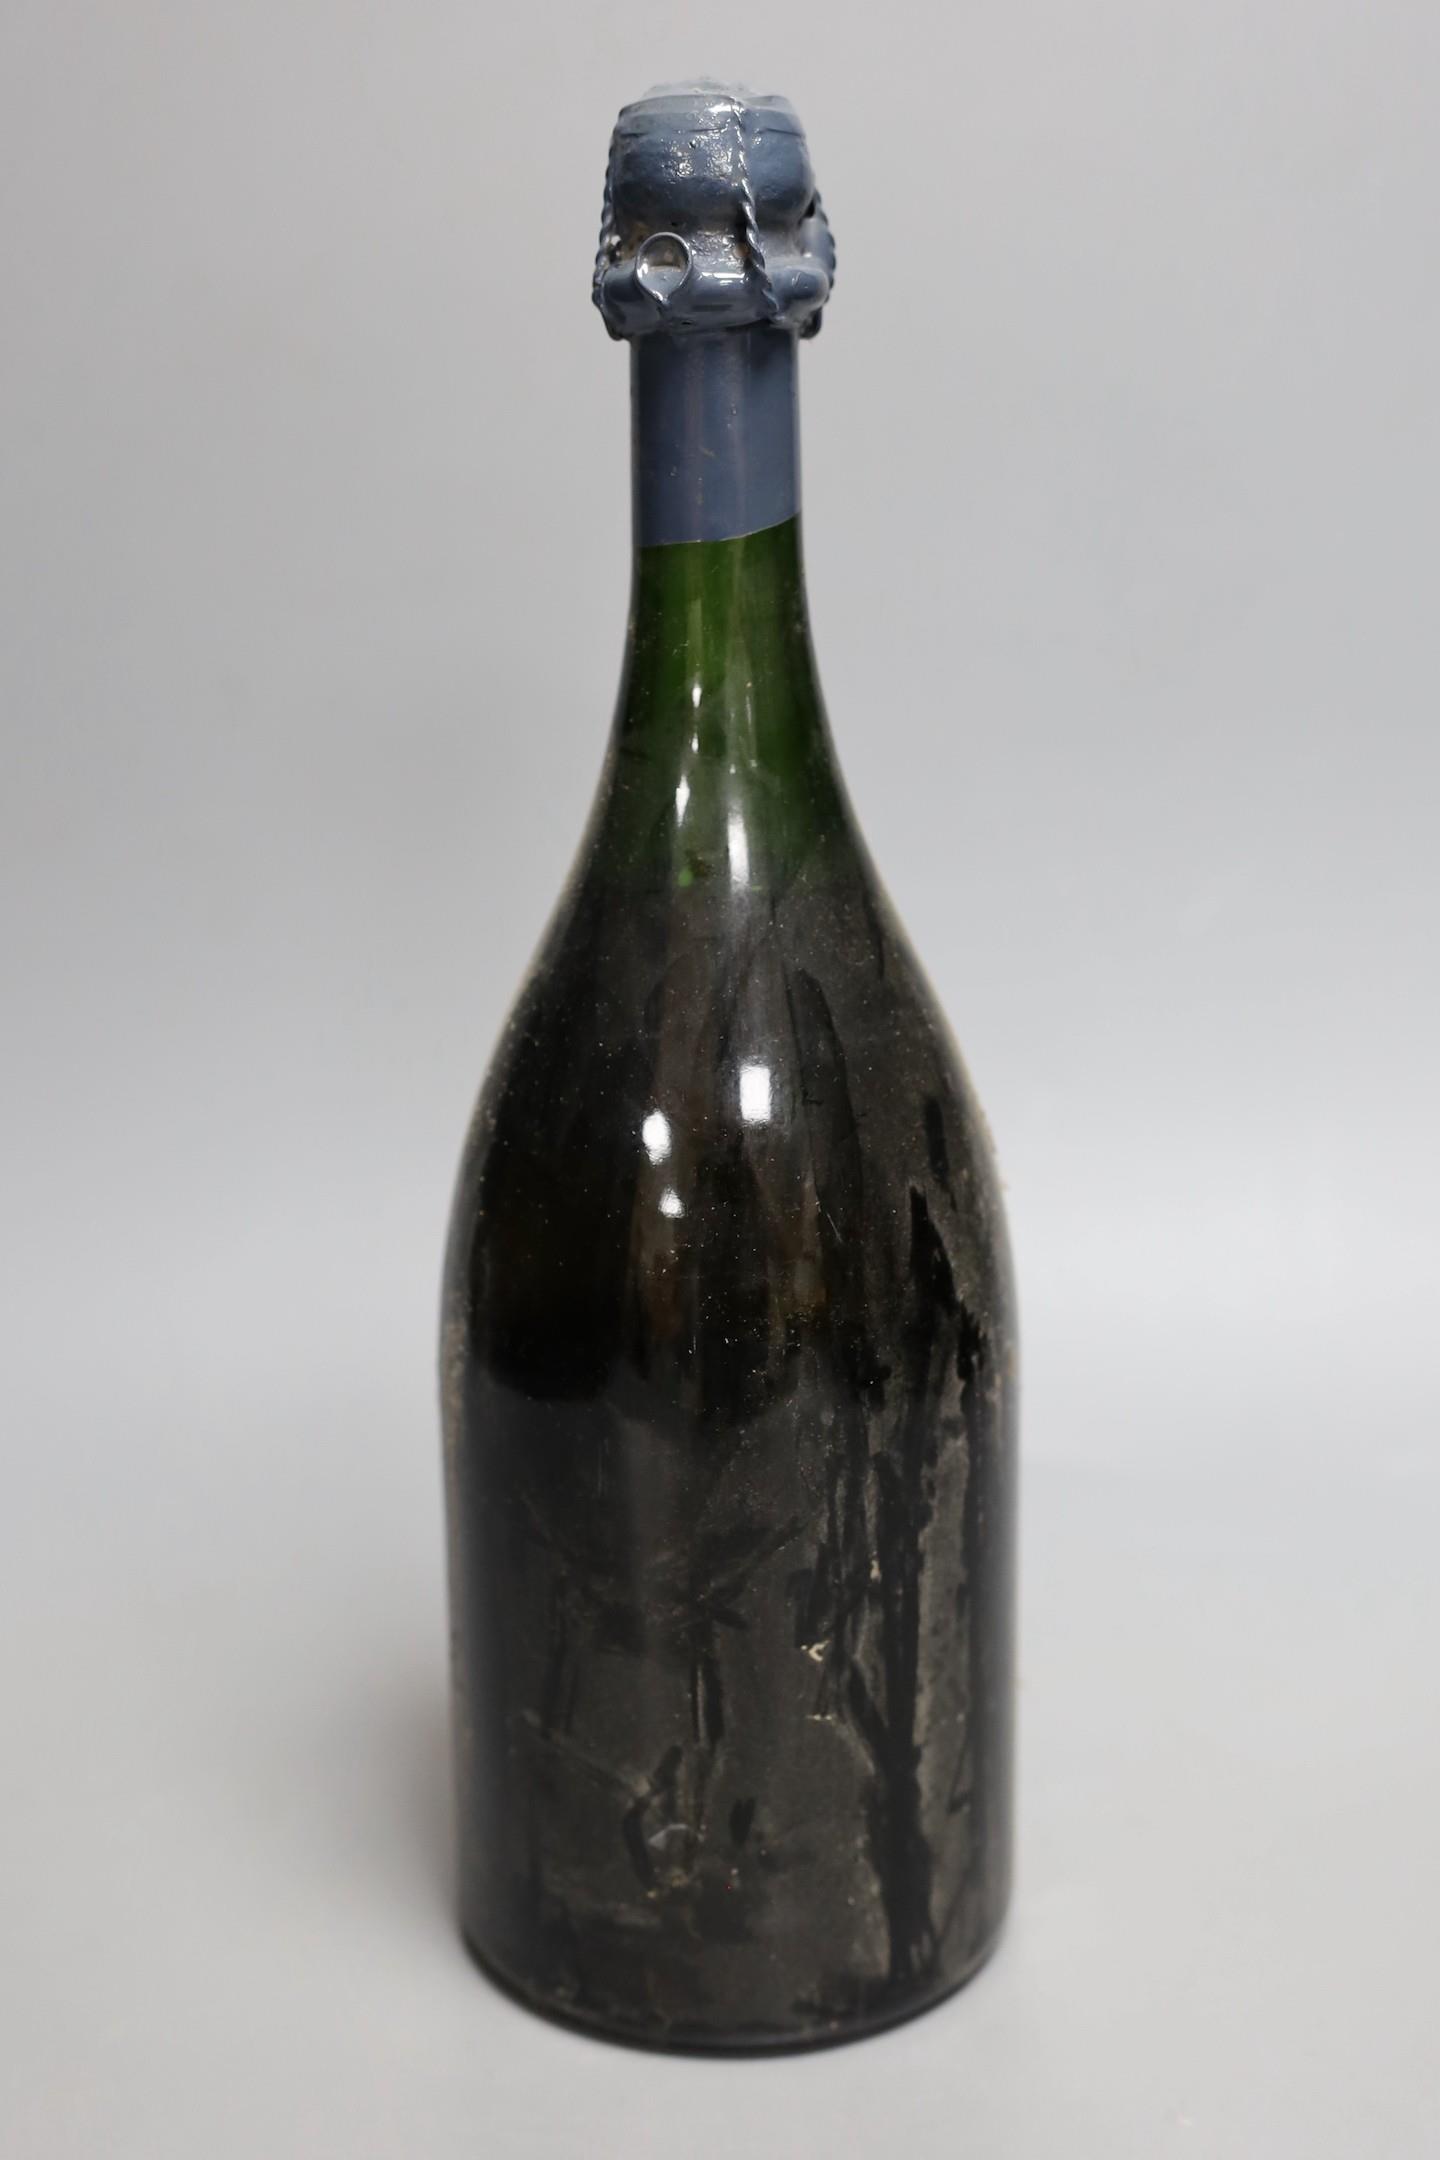 A bottle of Dom Perignon Vintage champagne, 1961 - Image 2 of 2